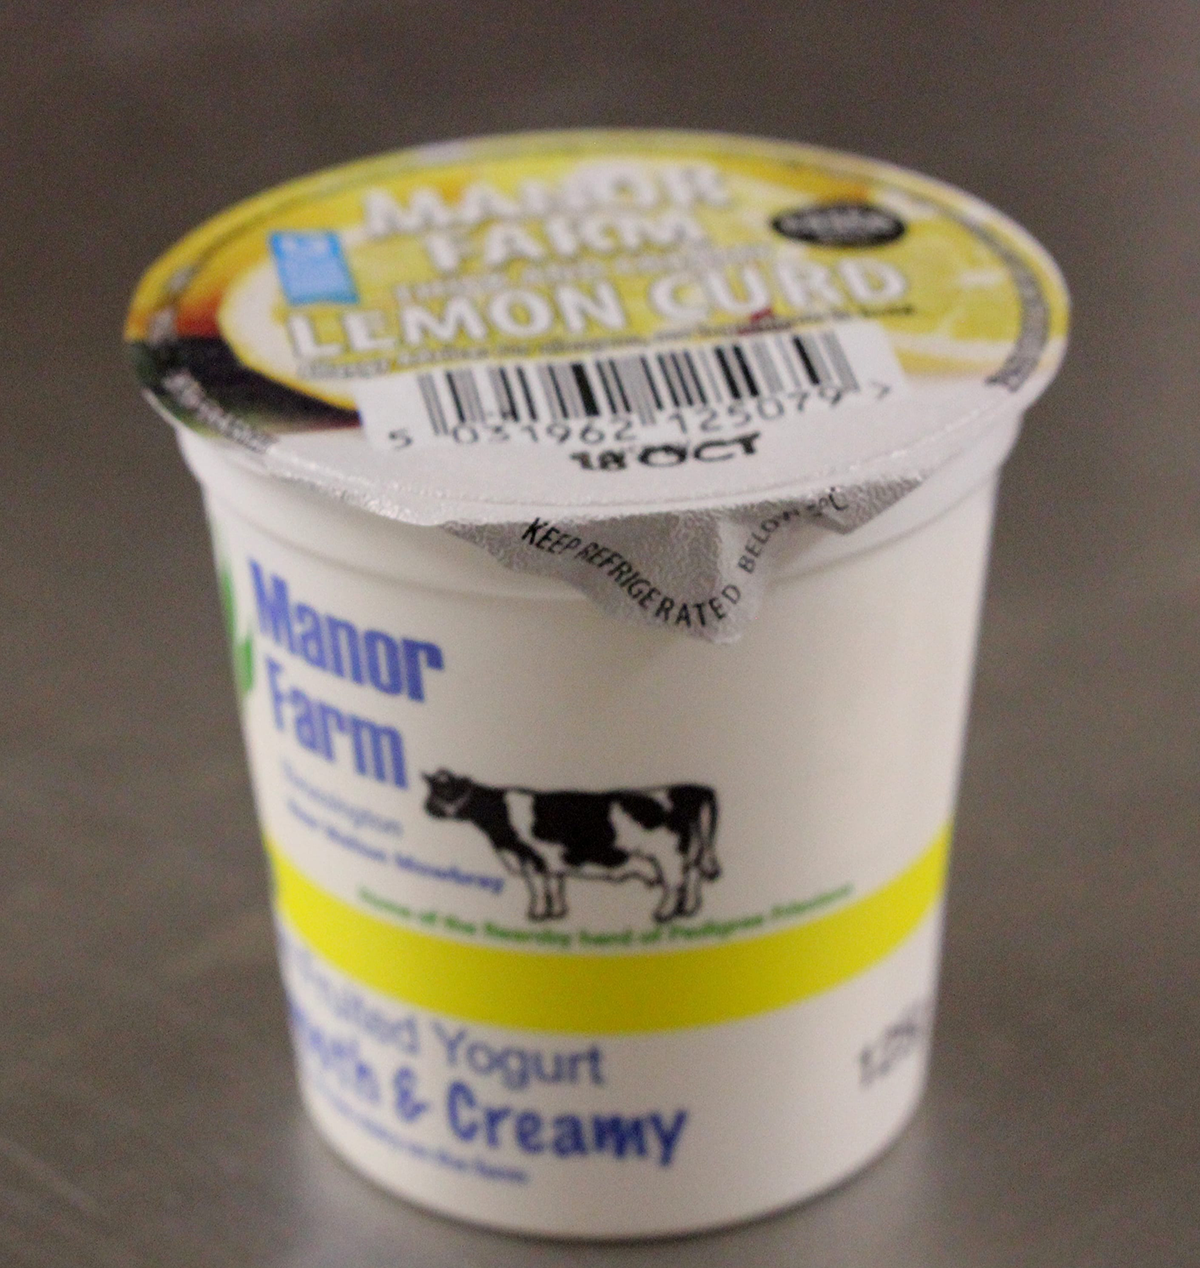 Manor farm yoghurt- lemon curd